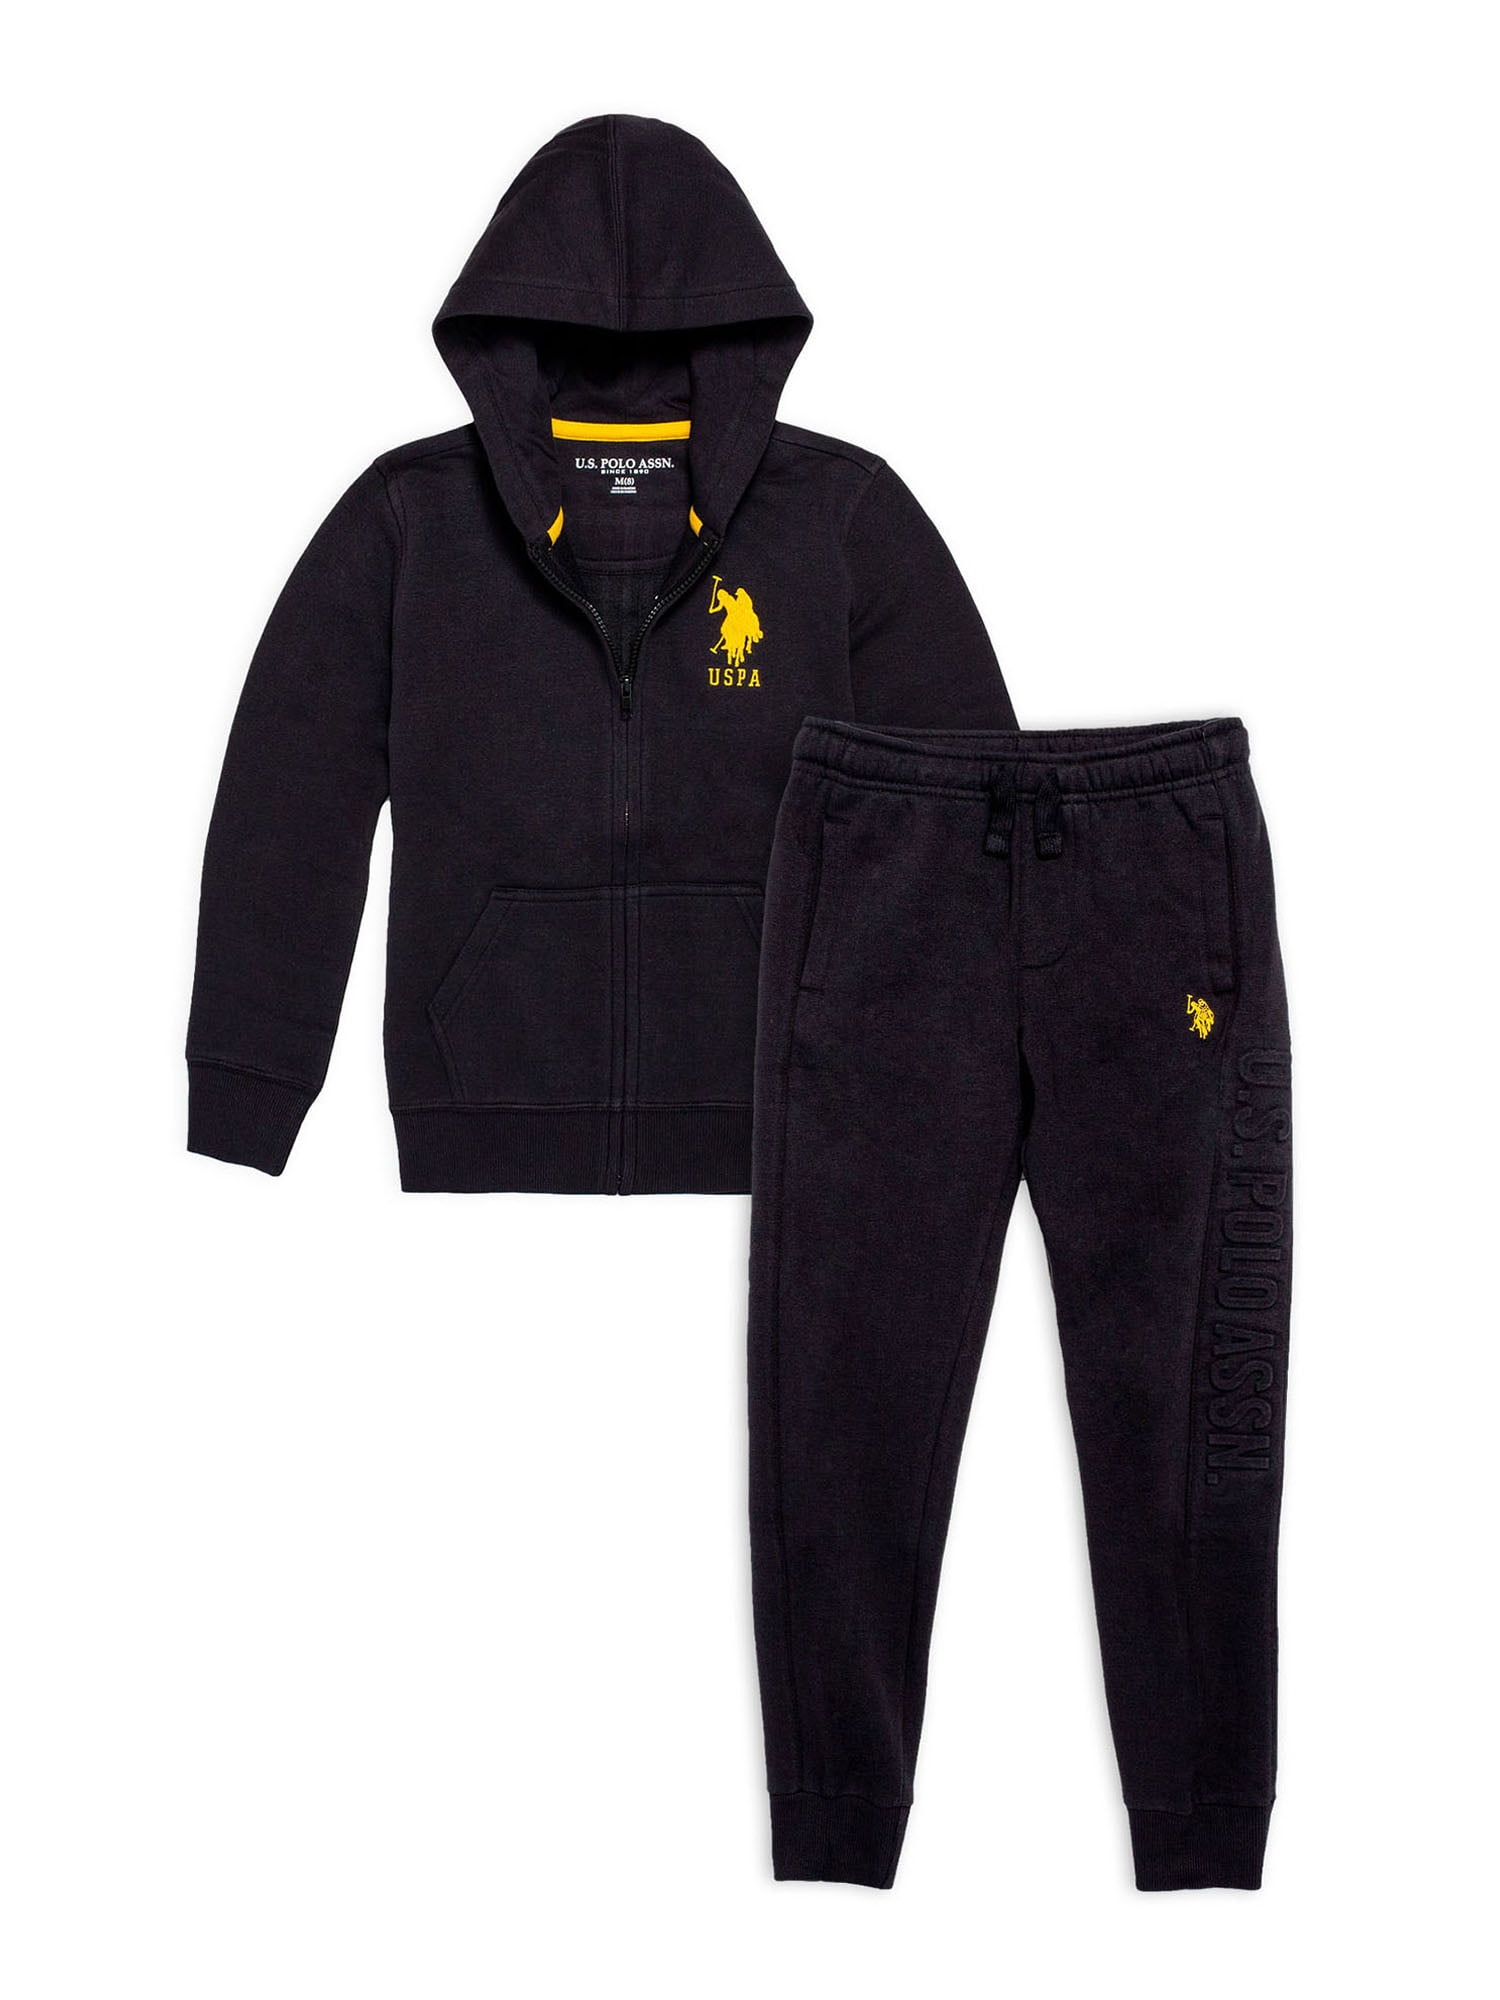 Transformers Toddler Boys Black Hoodie 2pc Sweat Suit Set Size 2T 